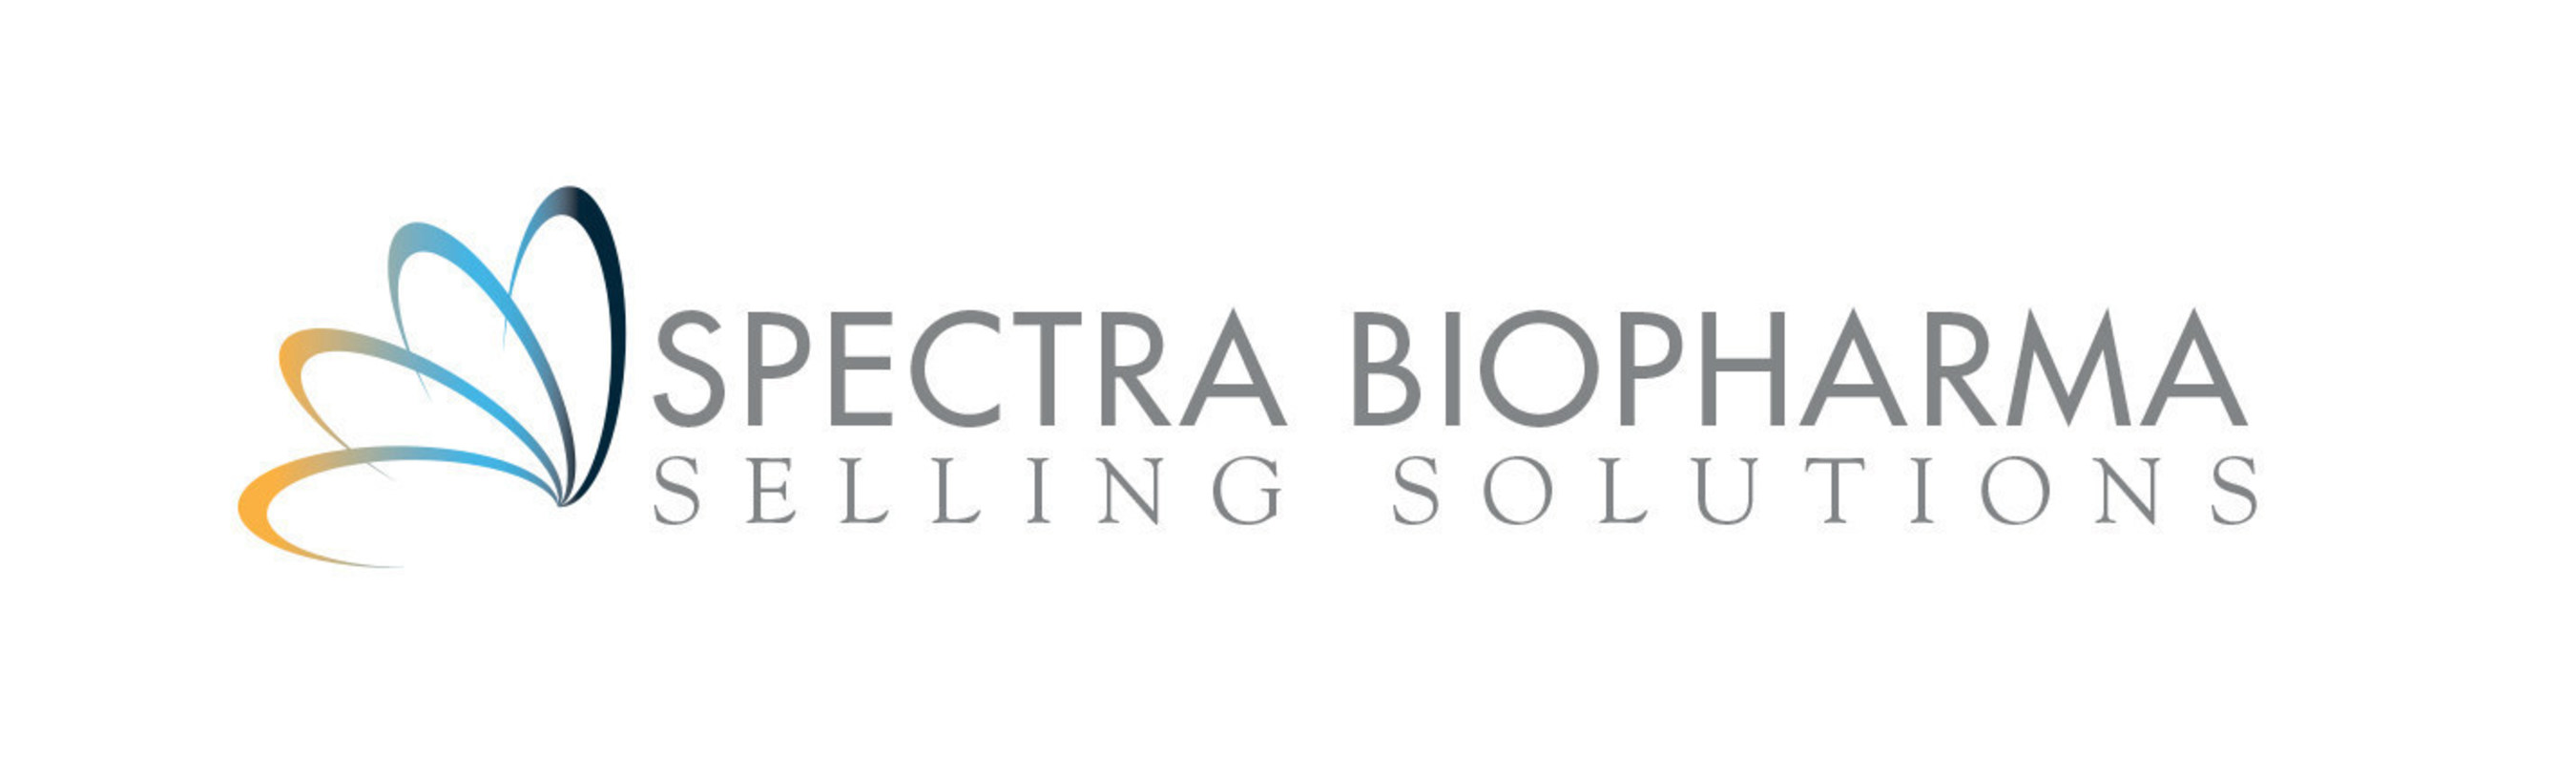 Spectra Logo (PRNewsFoto/Spectra BioPharma Selling Solut)